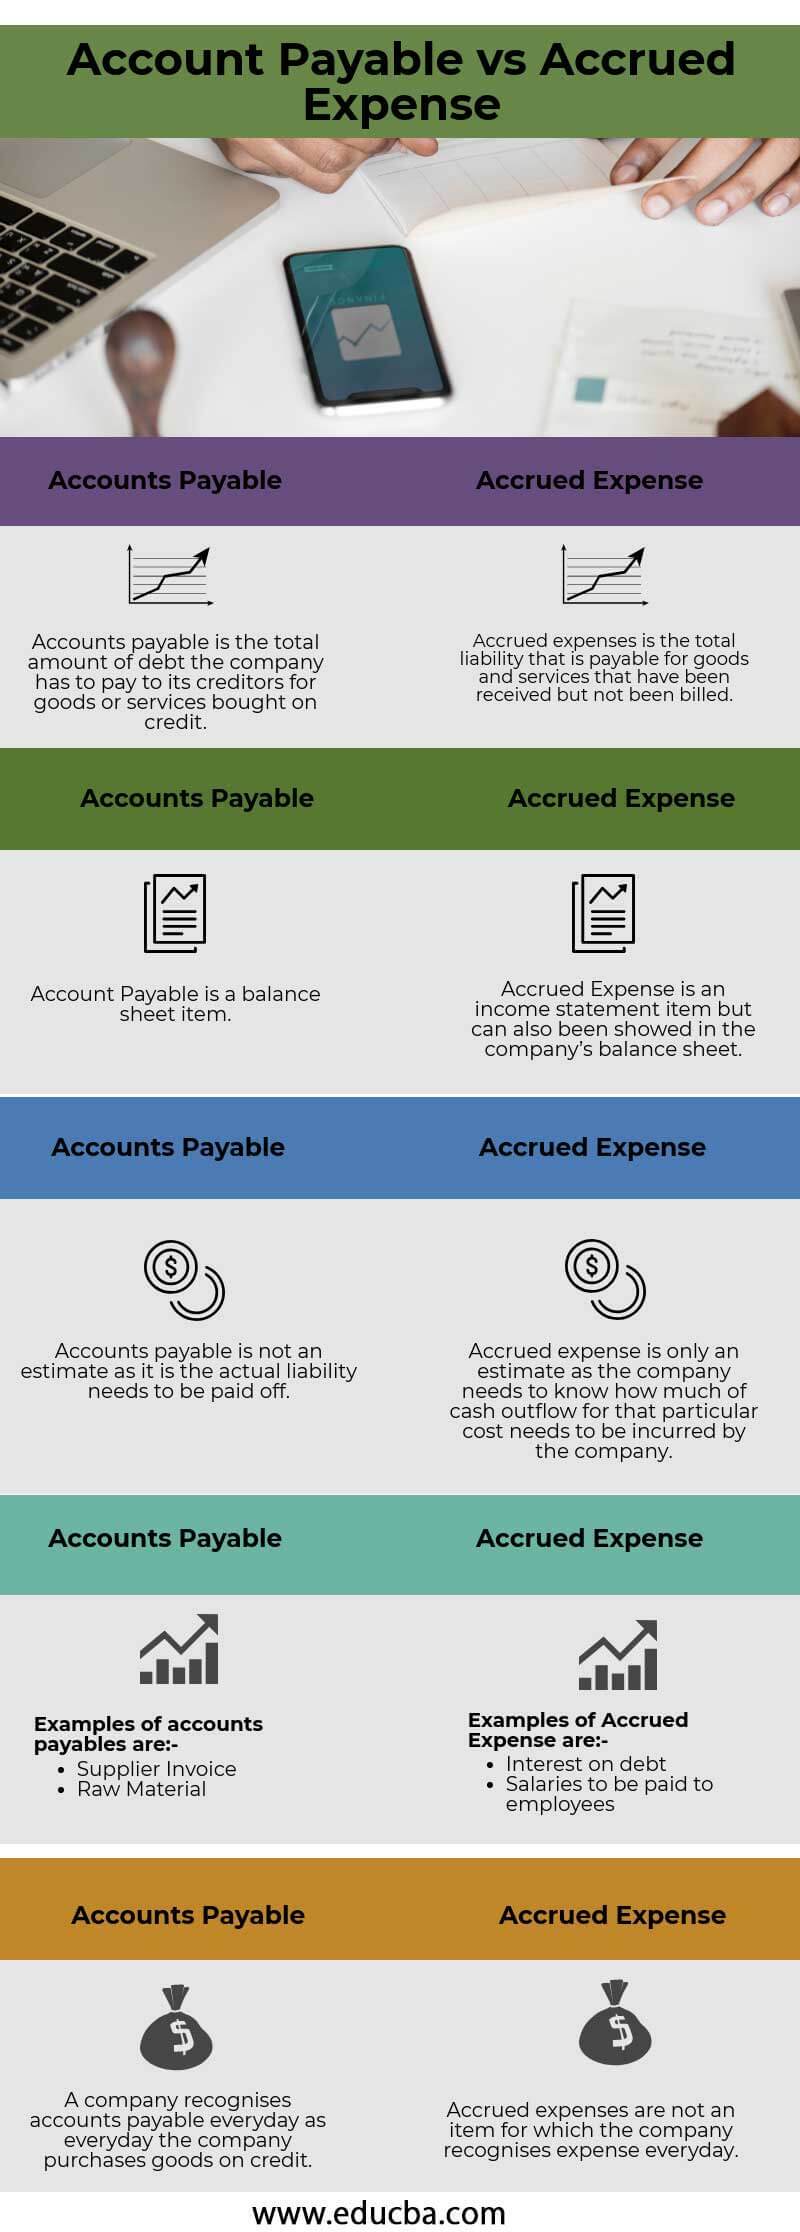 Account Payable vs Accrued Expense info